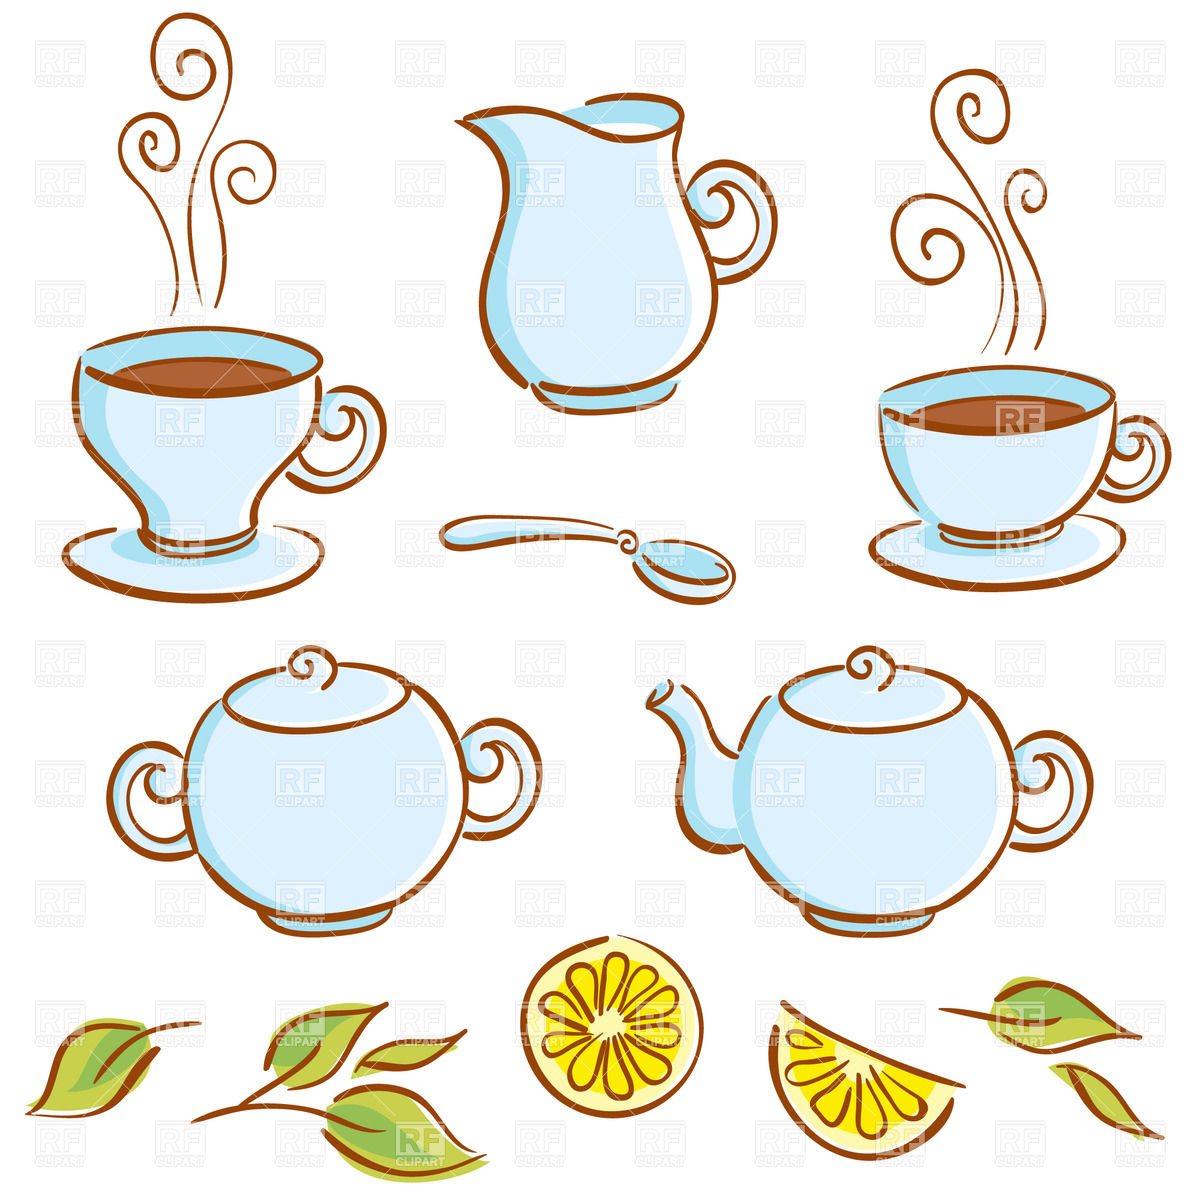 Bureau clipart: Tea set clipa